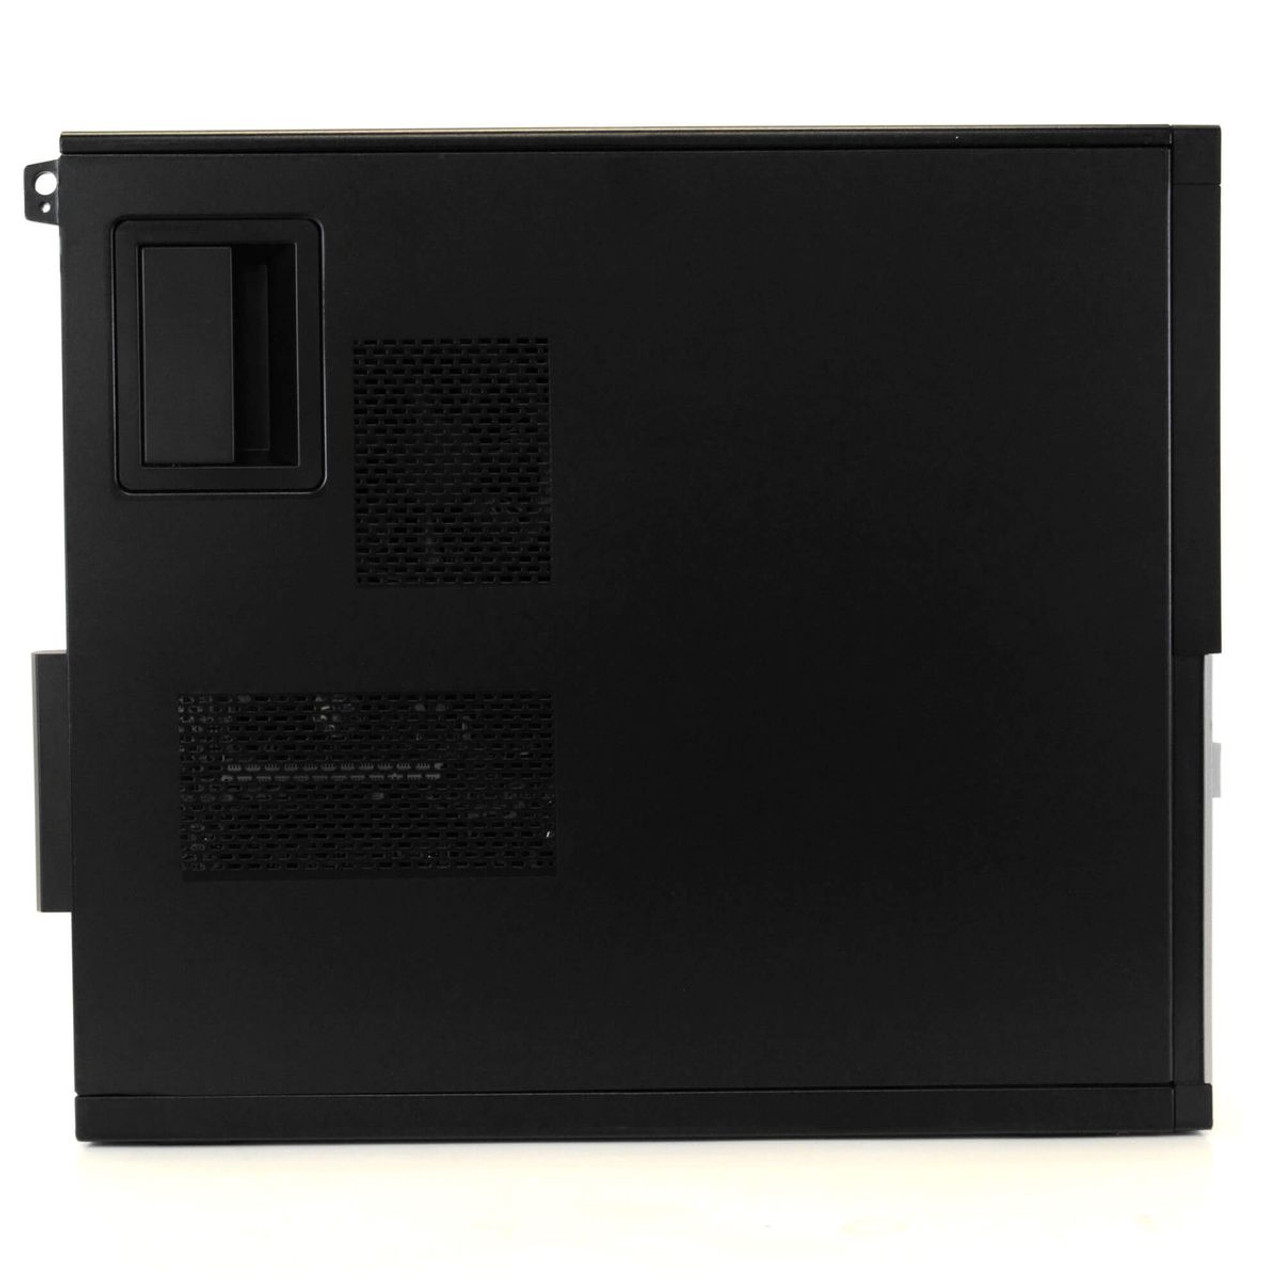 Dell Optiplex (7010) Desktop Computer product image